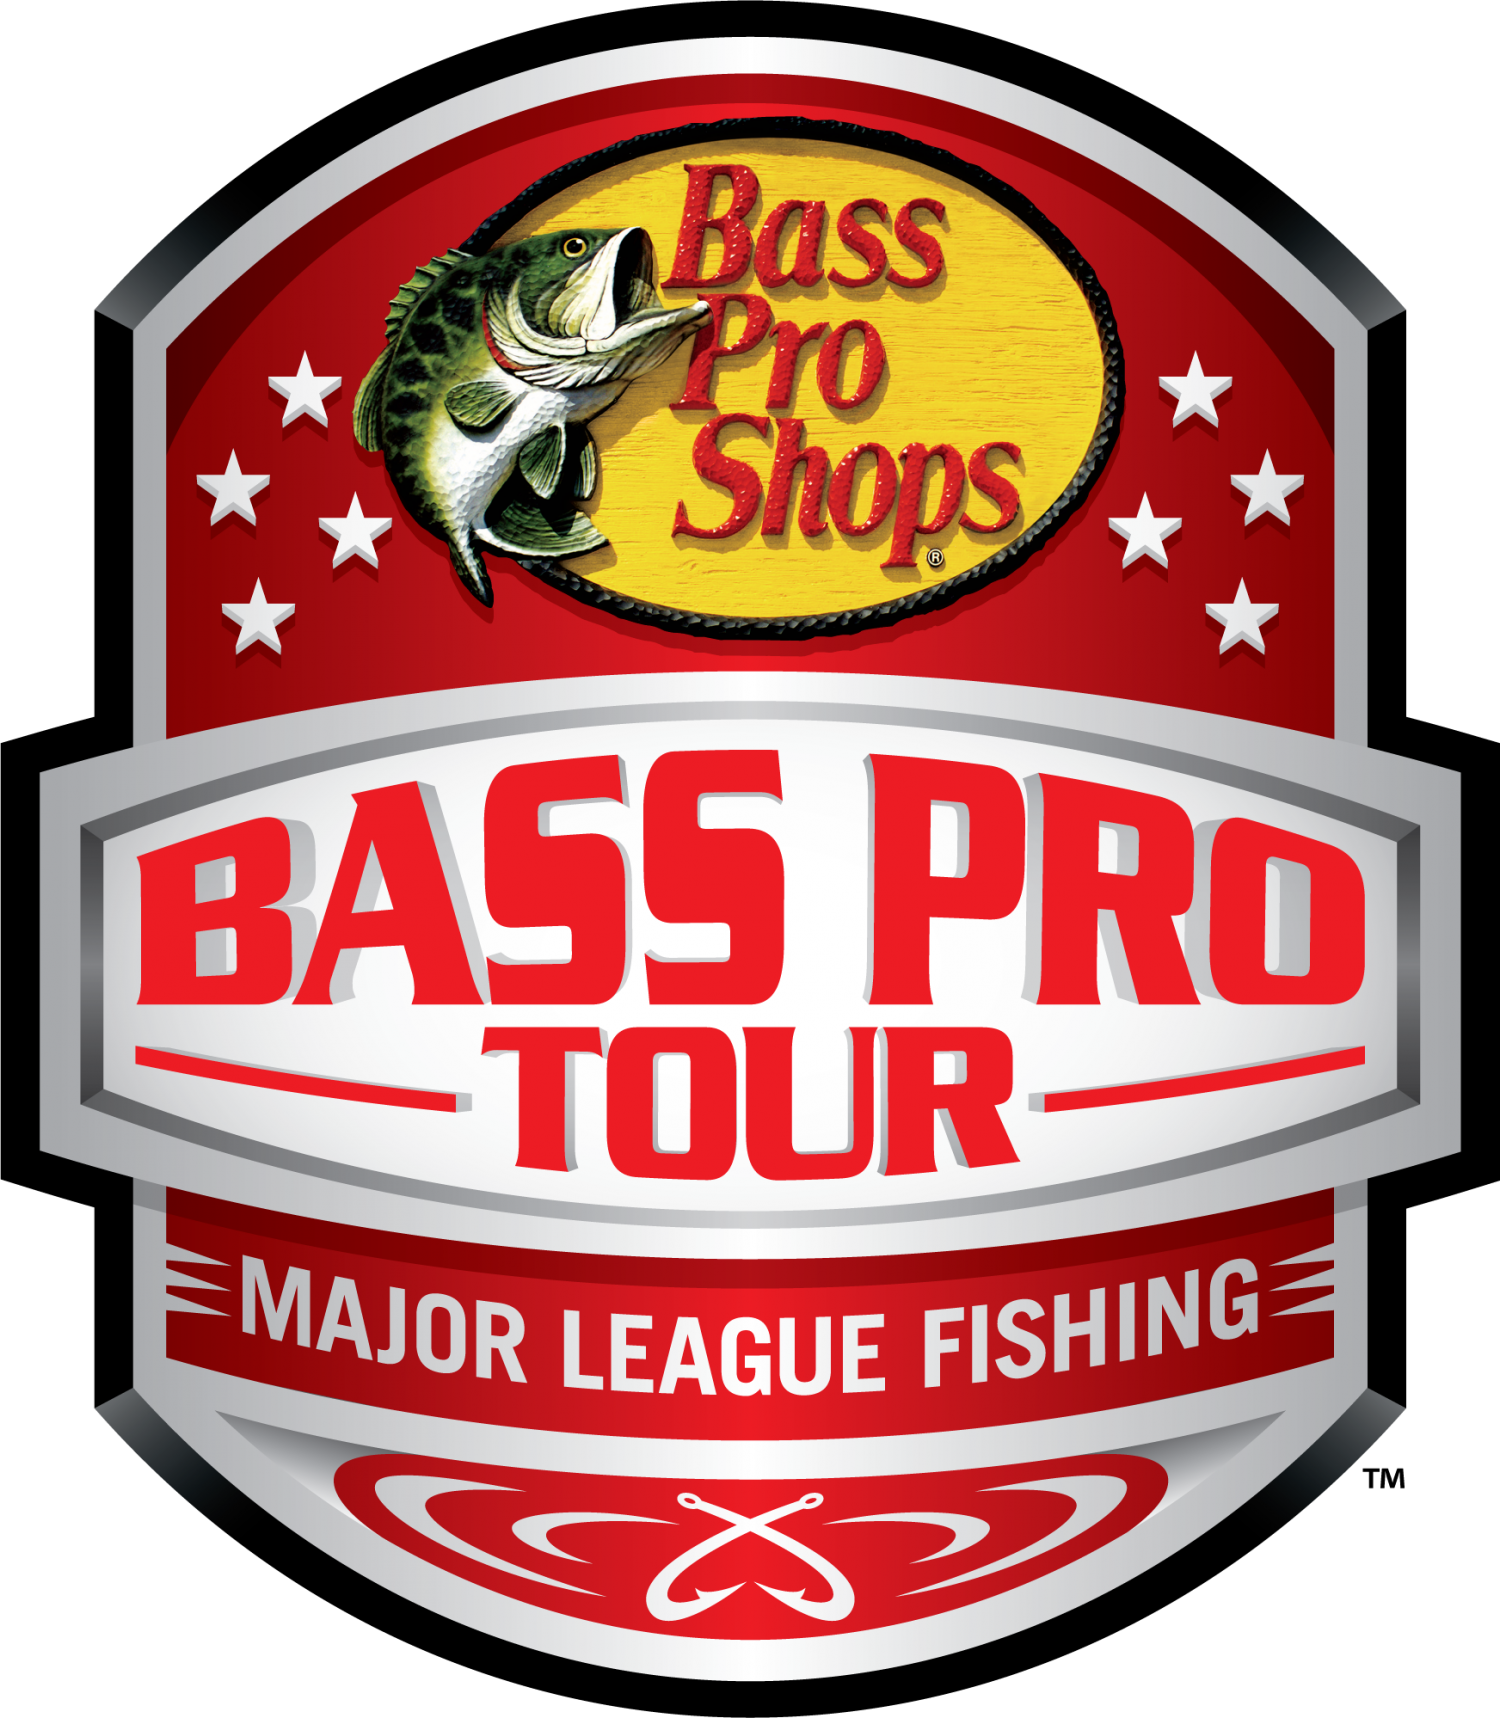 Neenah will host Major League Fishing Bass Pro Tour in June